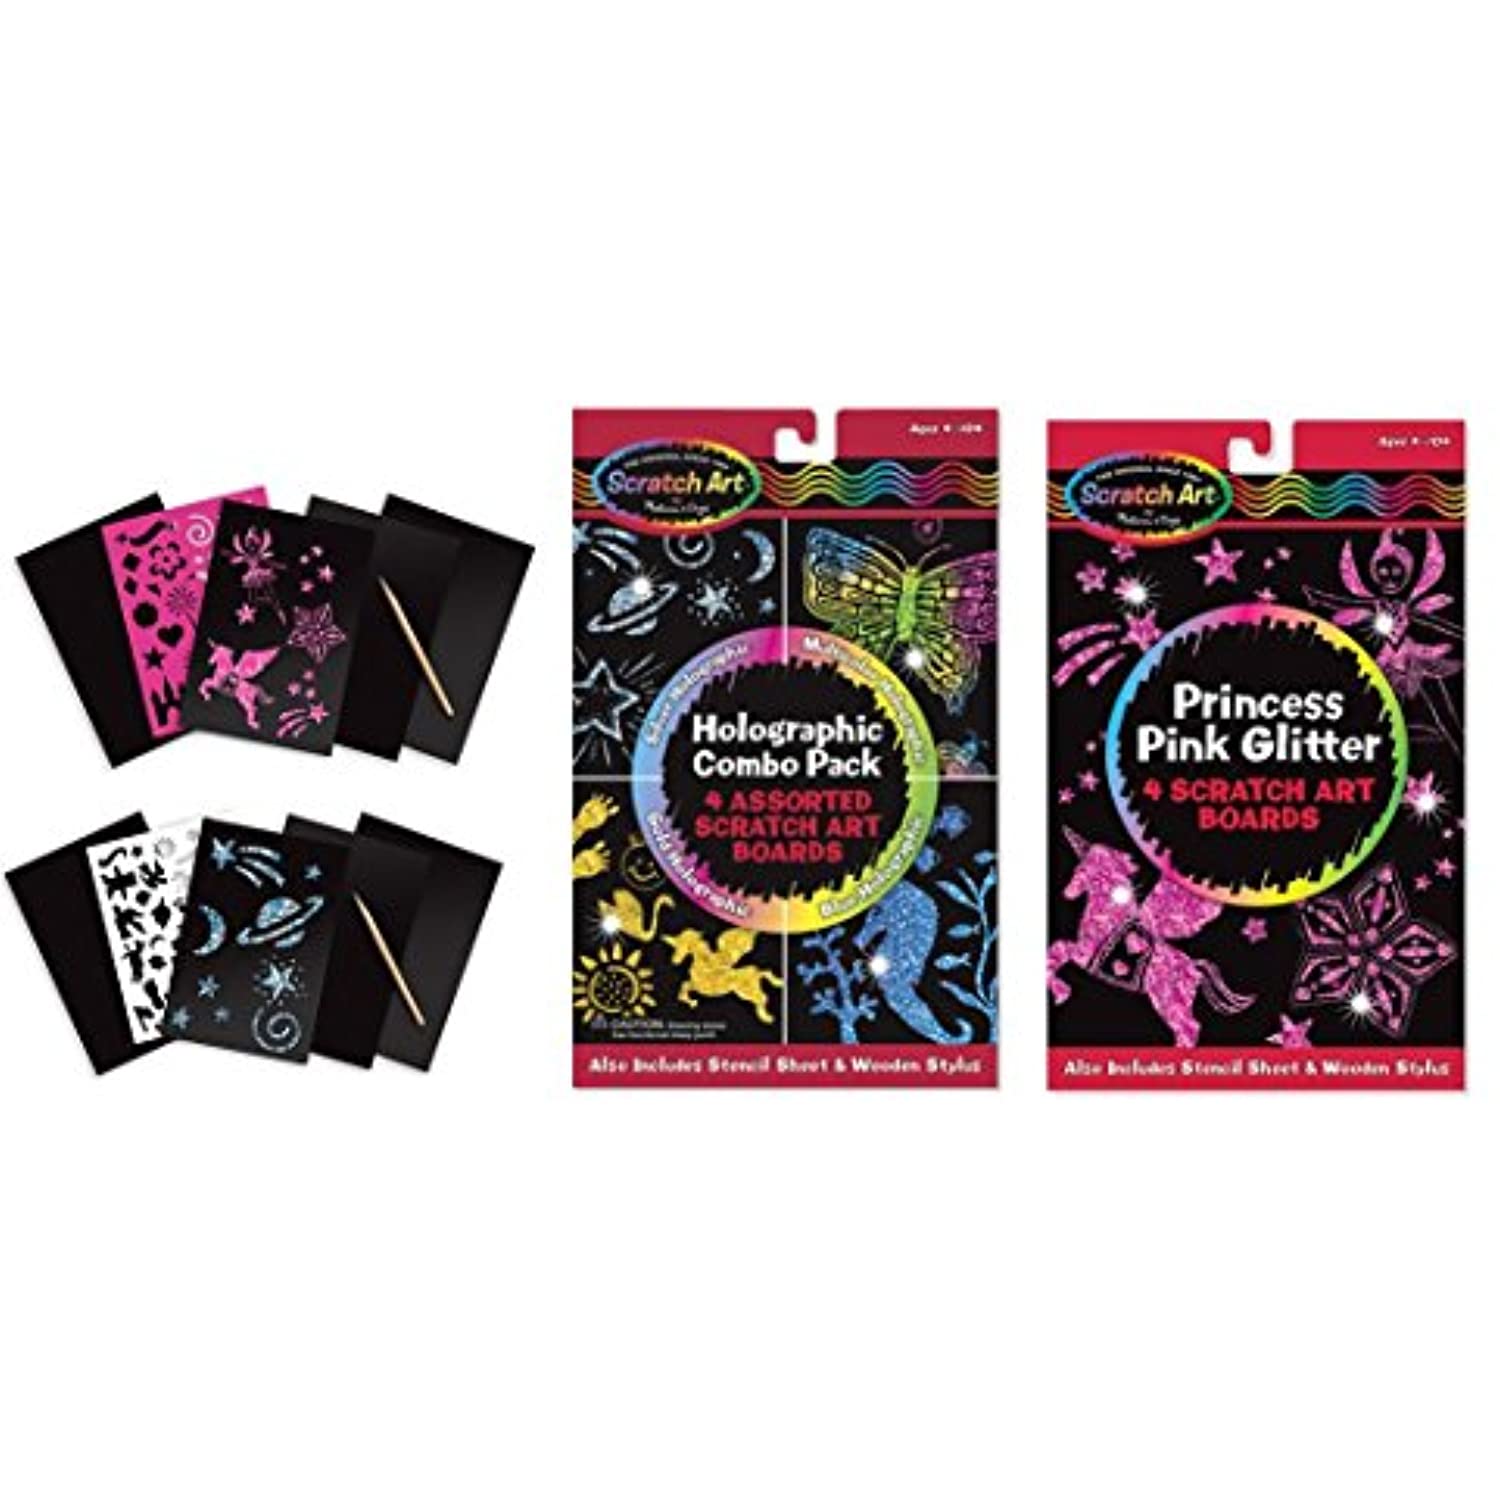 Melissa & Doug Scratch Art Bundle - Holographic Combo Pack + Princess Pink Glitter